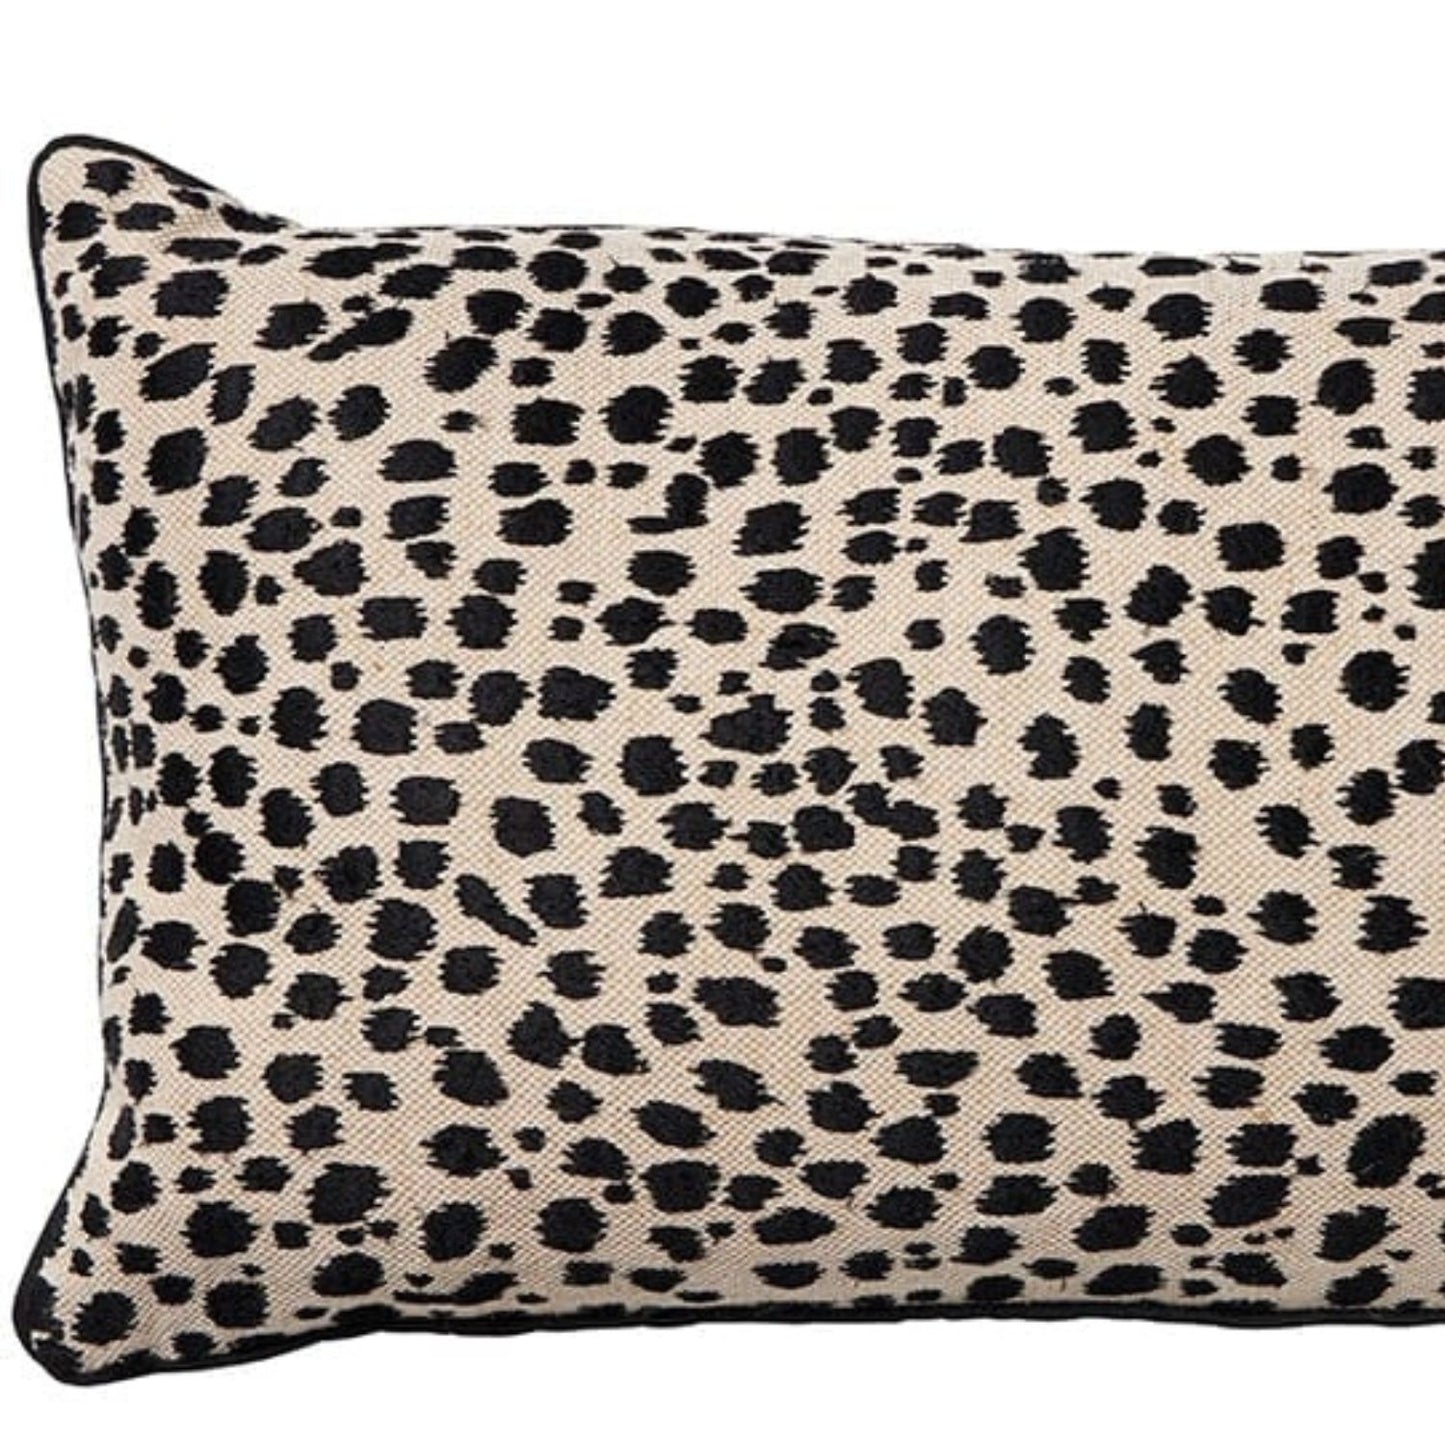 Leopard Print Cushion 30x50